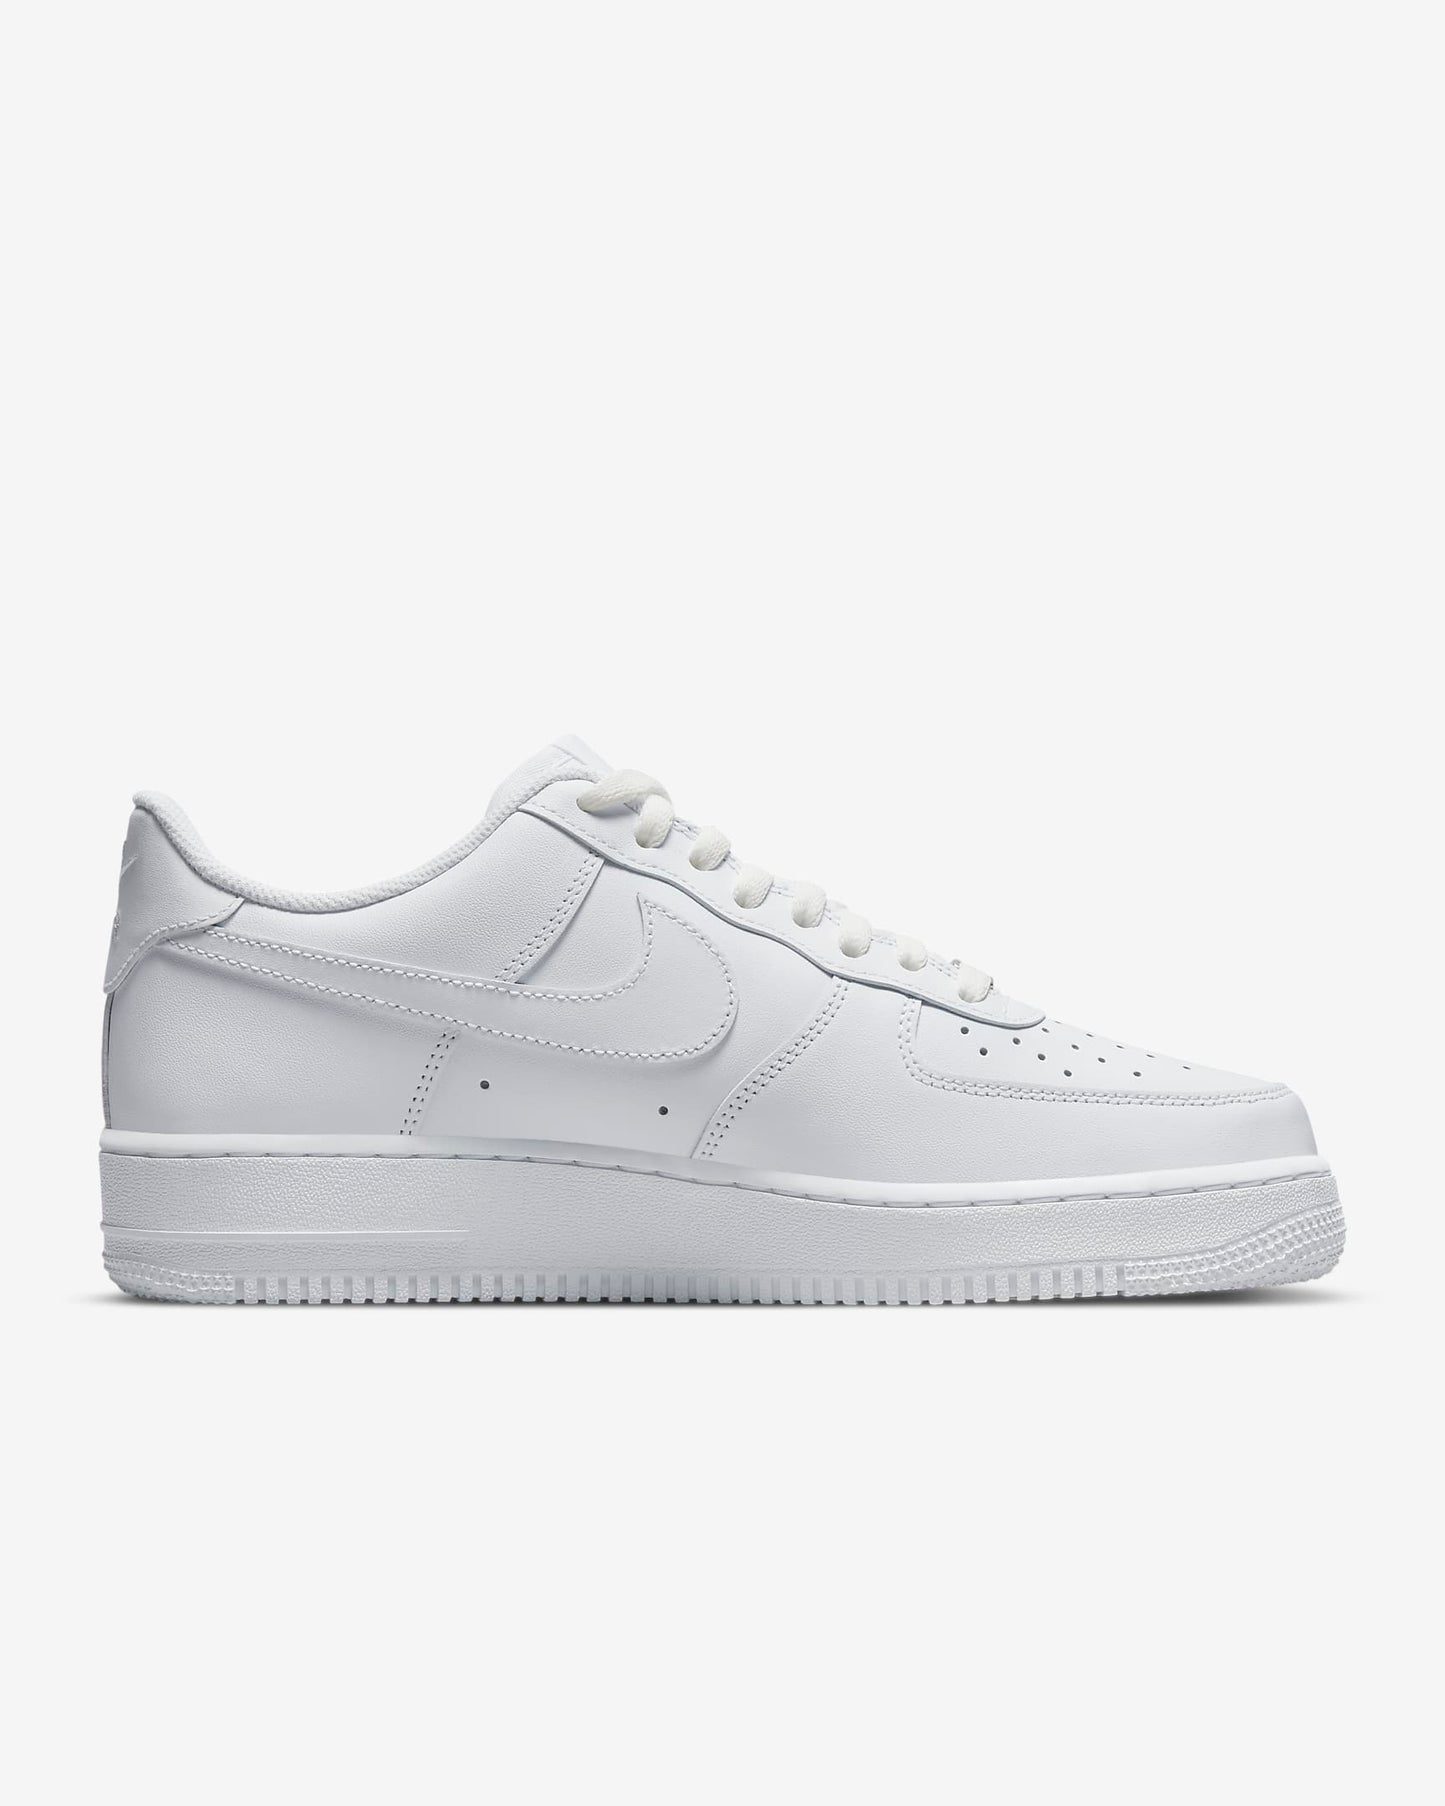 Nike Air Force 1 '07 Men's Shoes, White/White